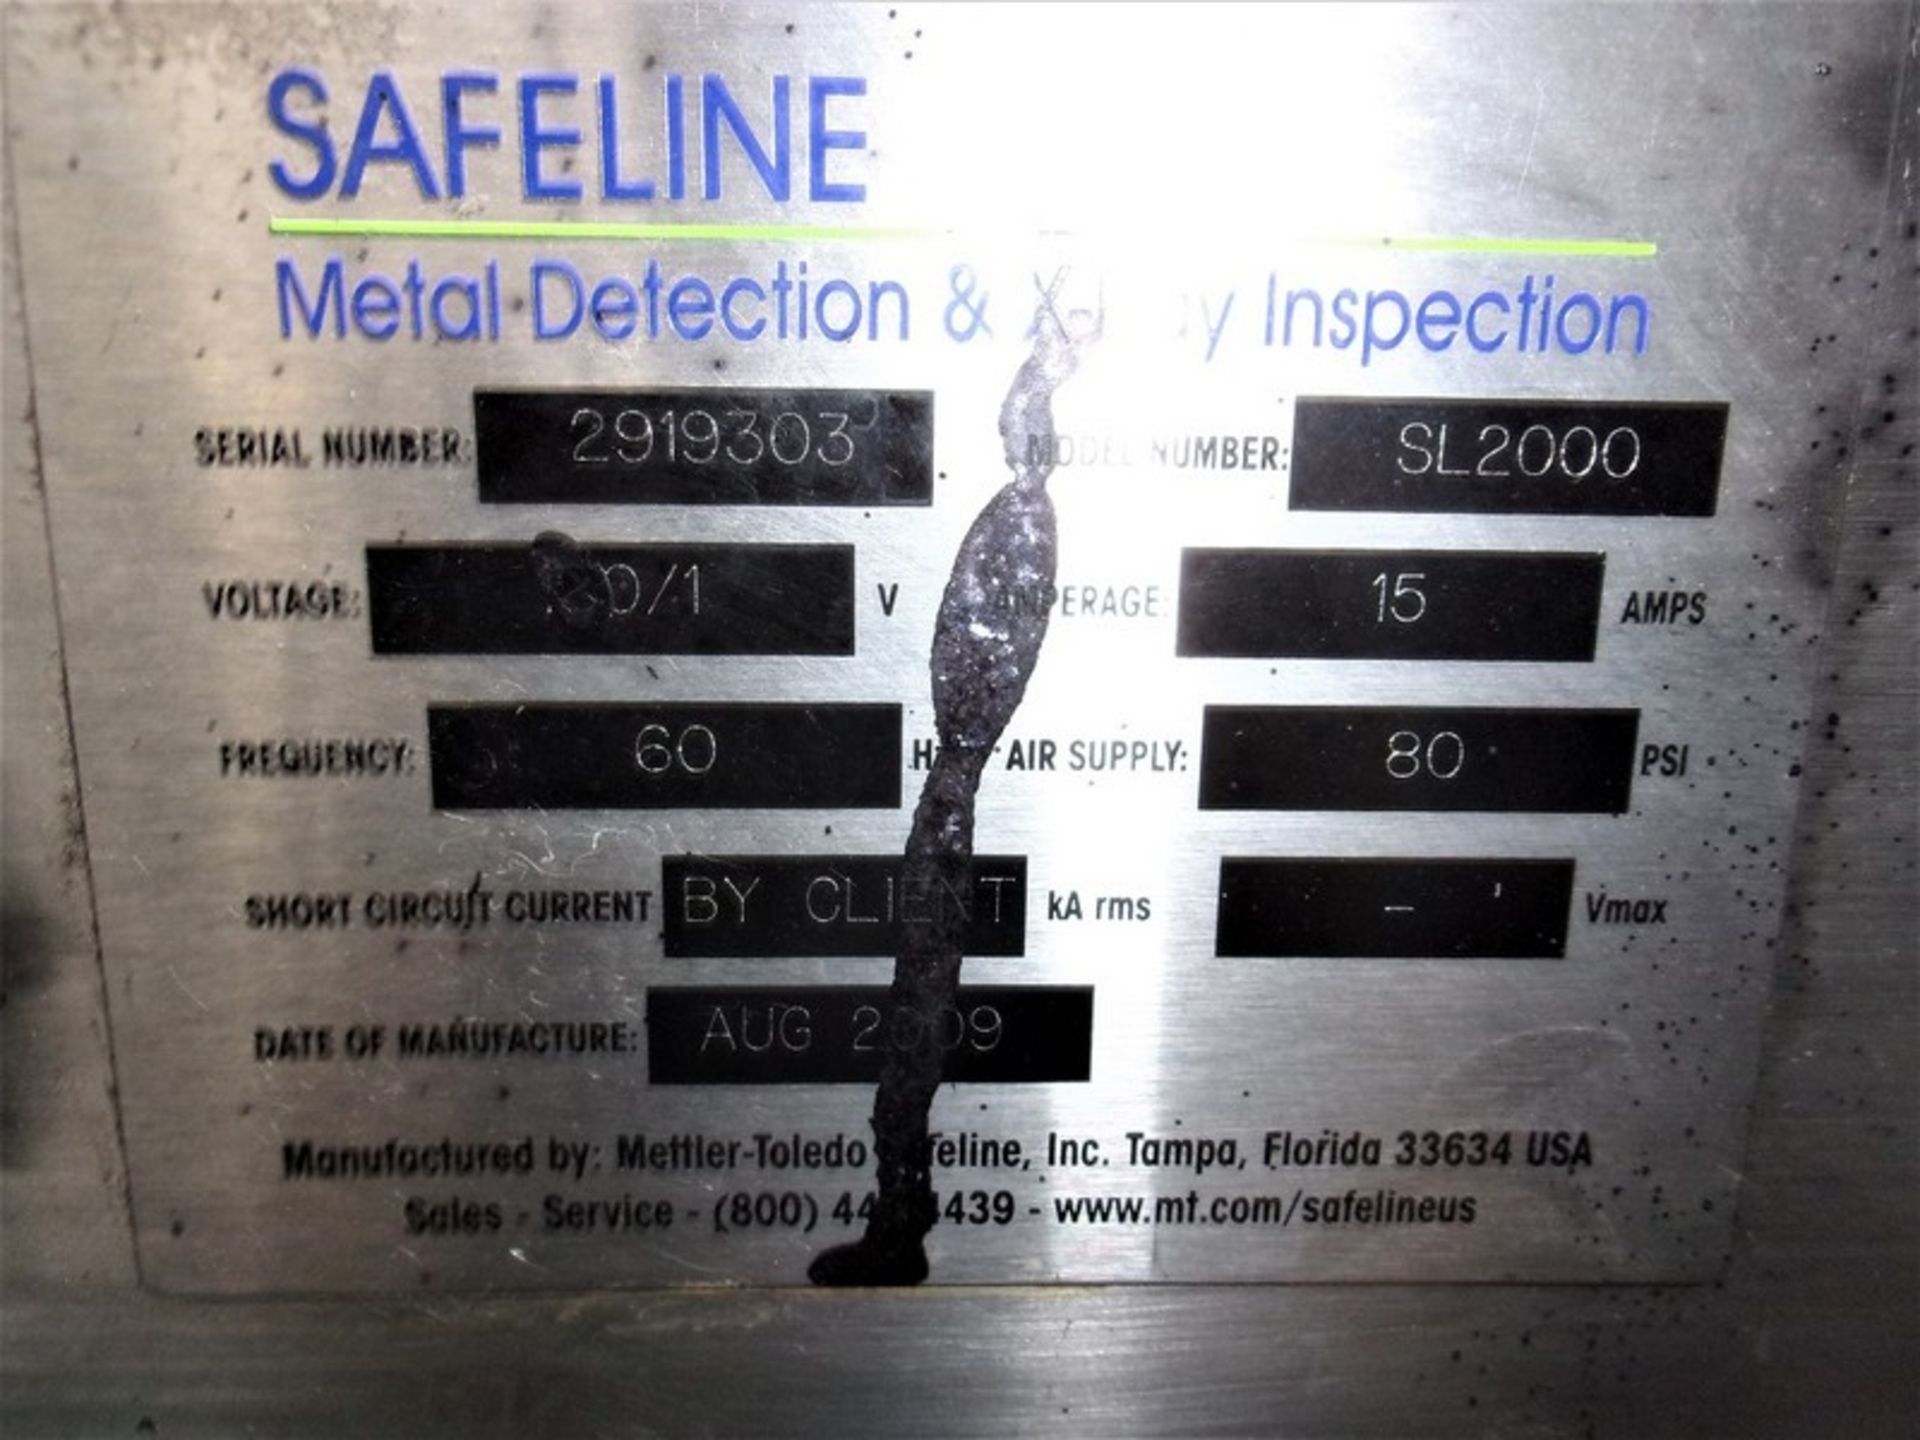 Safeline Metal Detector, Model SL2000, Serial # 2919303, Mfg. 2009 with 8 Inch wide intralox belt - Image 9 of 15